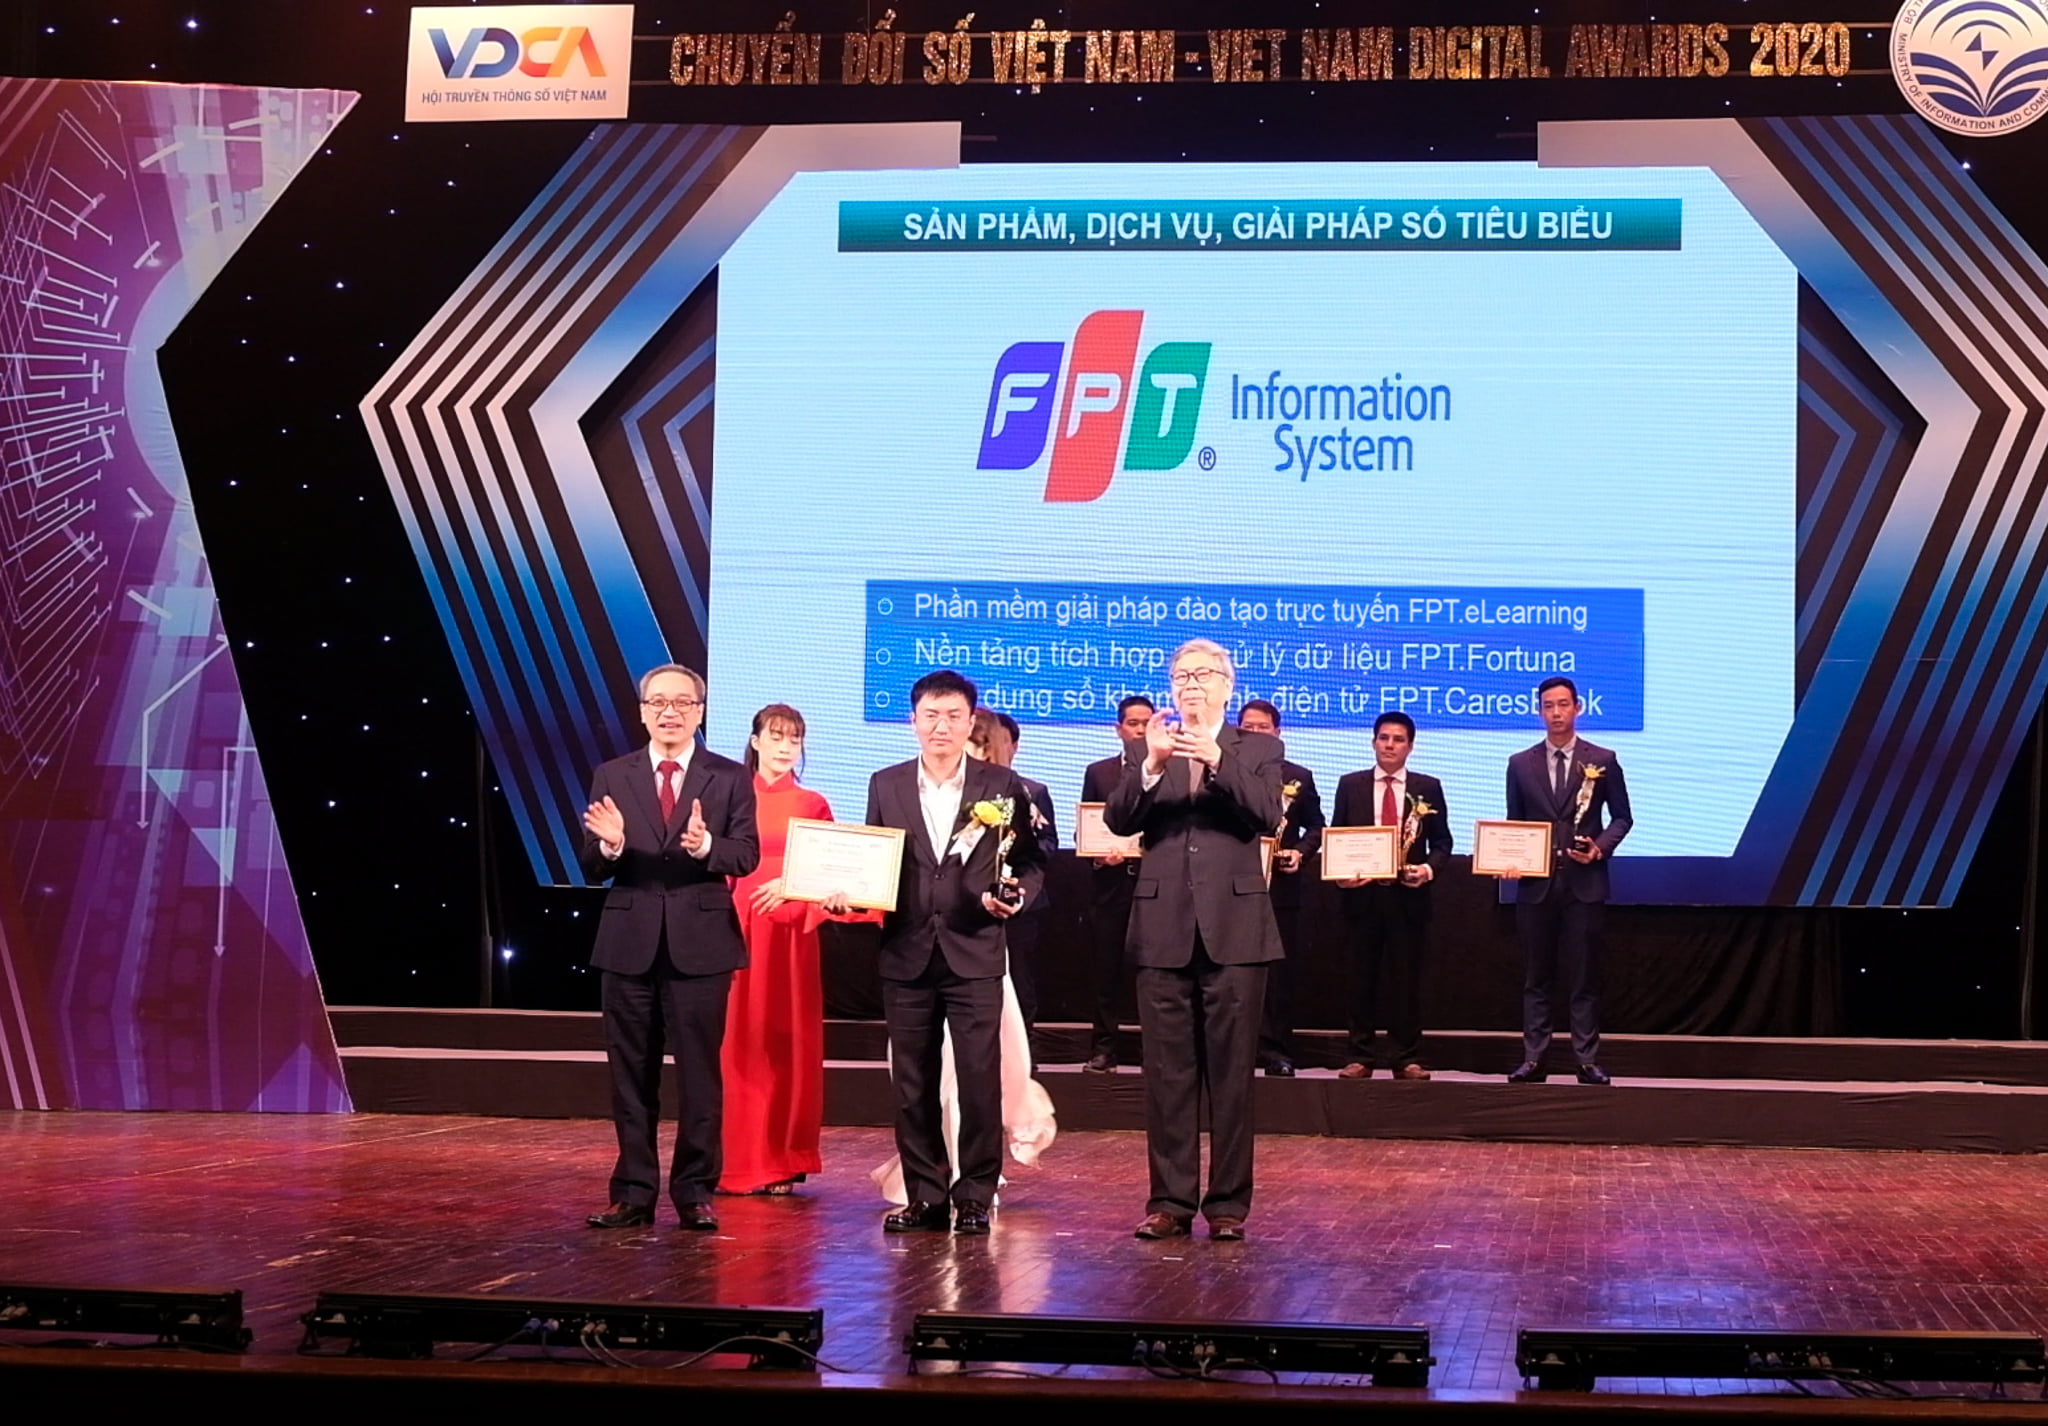 2020 Vietnam Digital Awards – Electronic Personal Health Records (FPT.CaresBook)